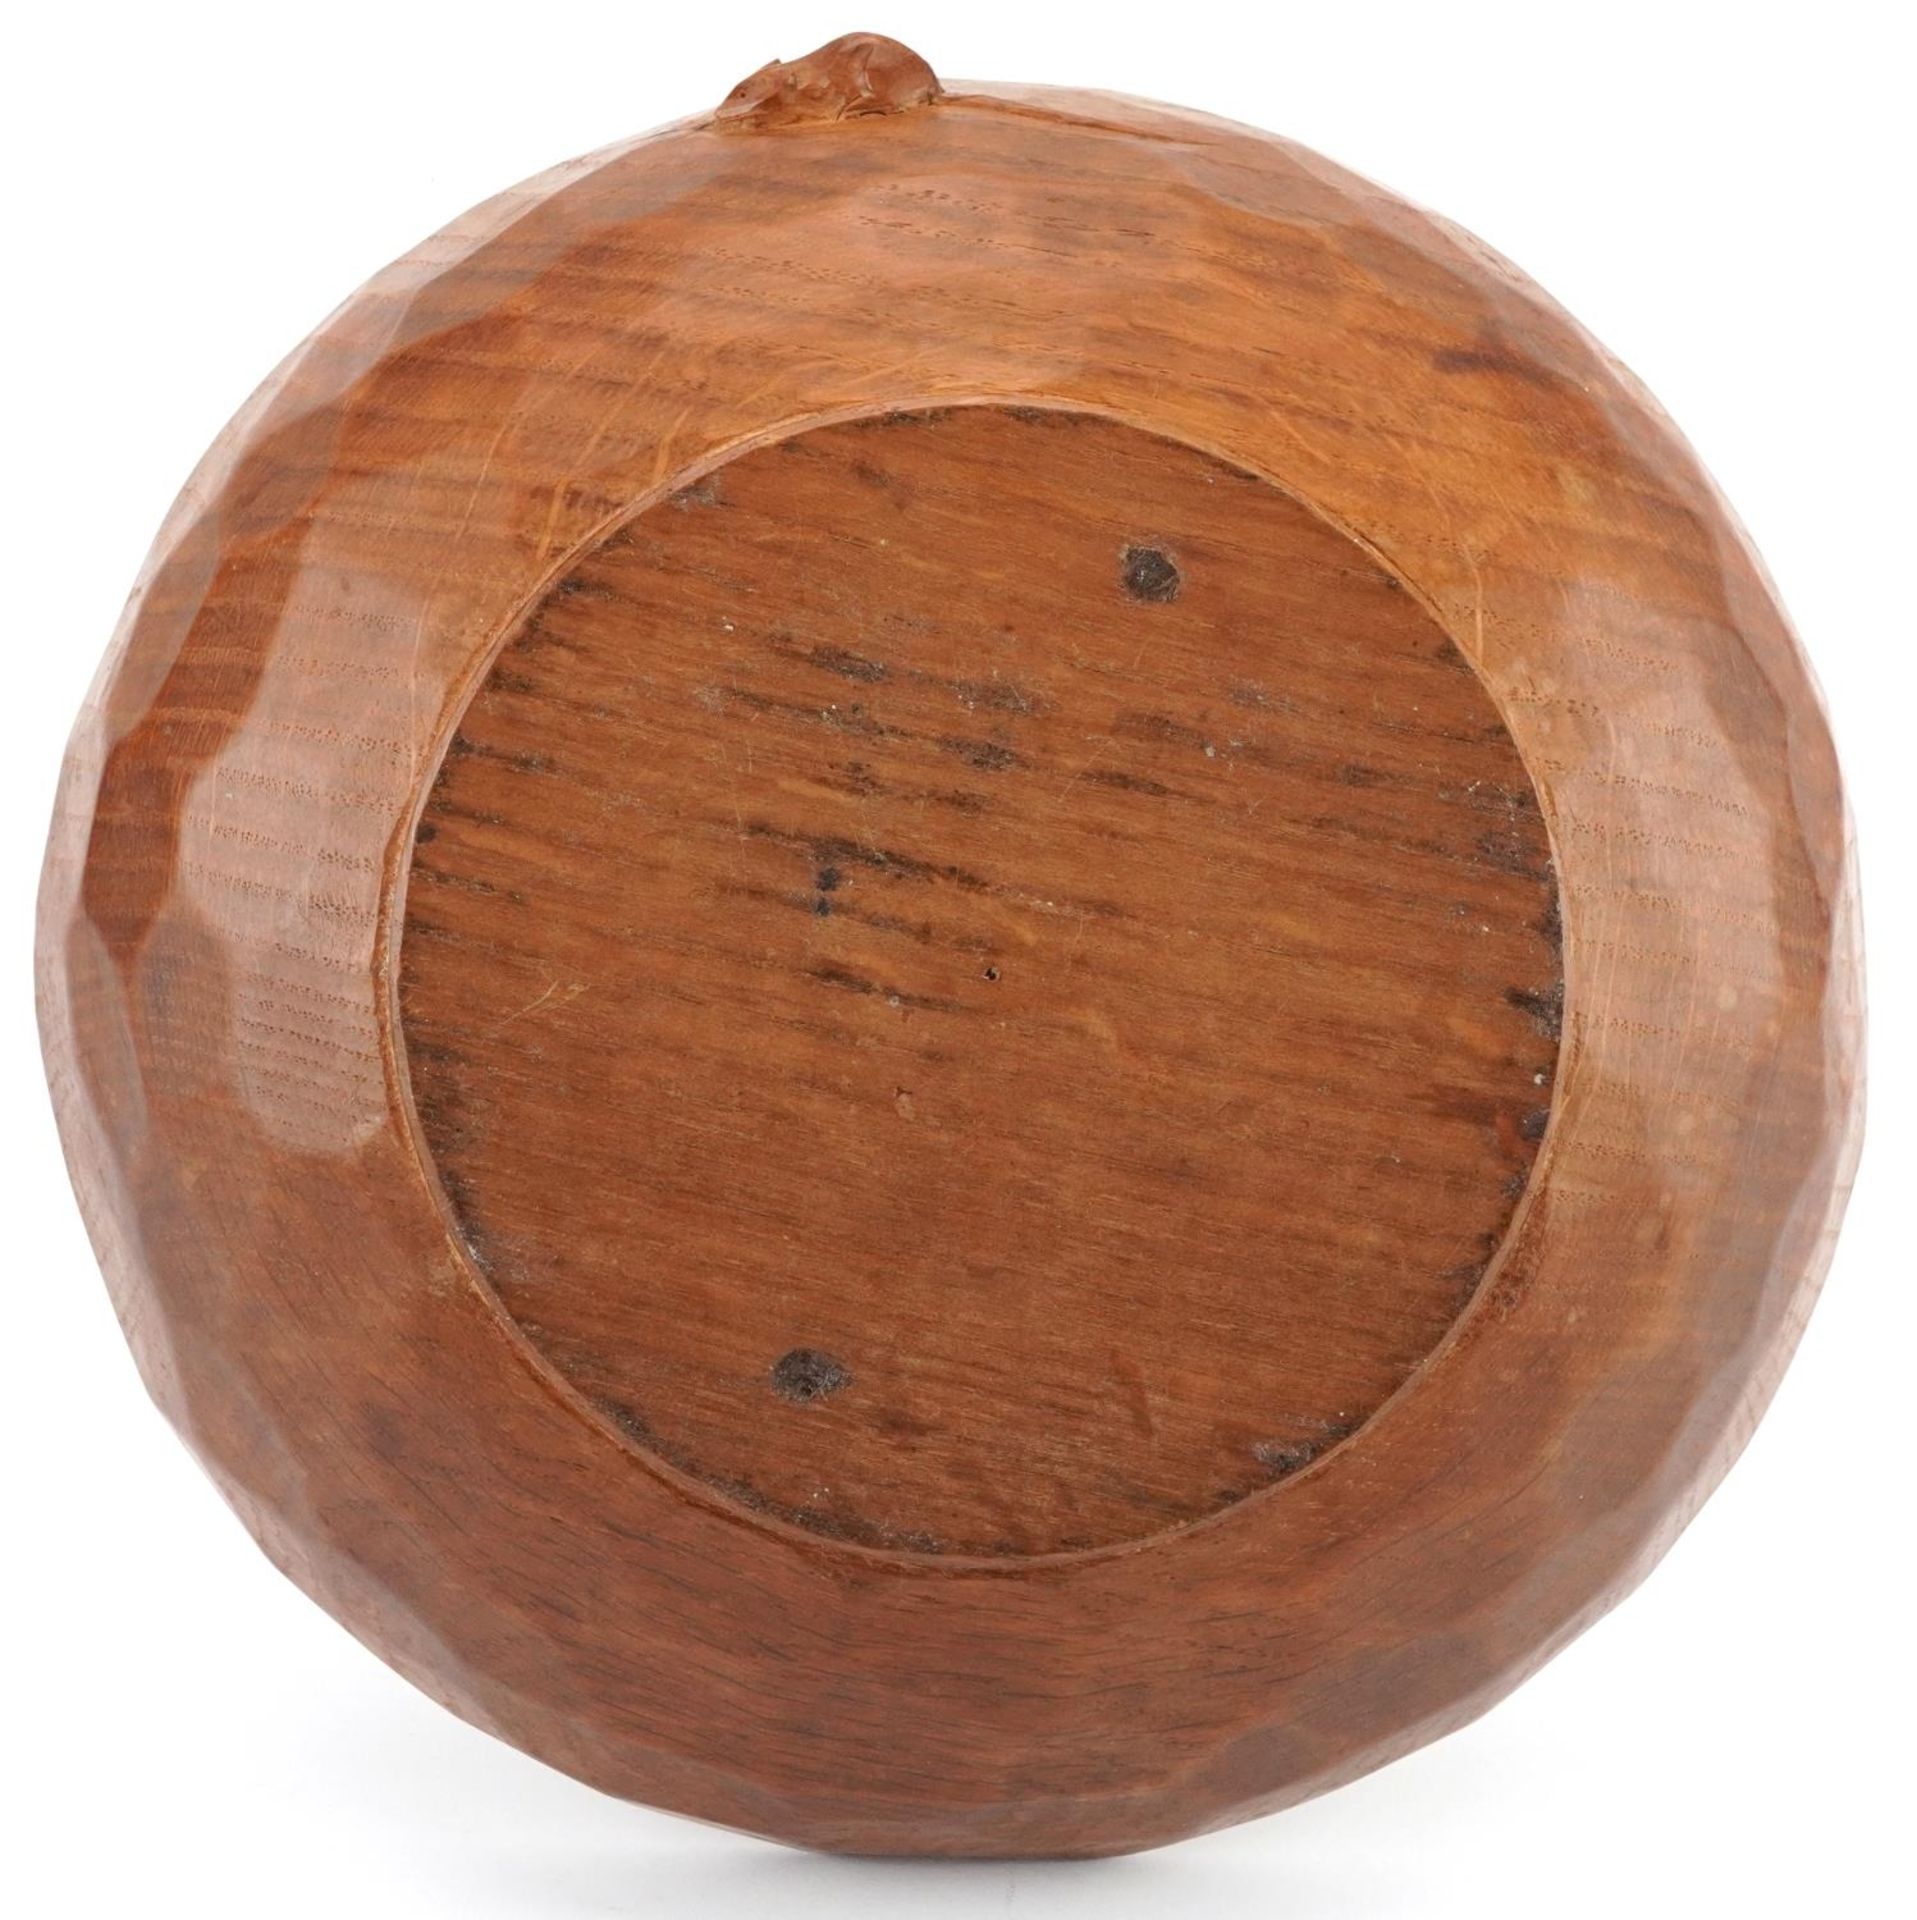 Robert Mouseman Thompson, adzed oak fruit bowl with signature mouse, 26cm in diameter - Image 4 of 4